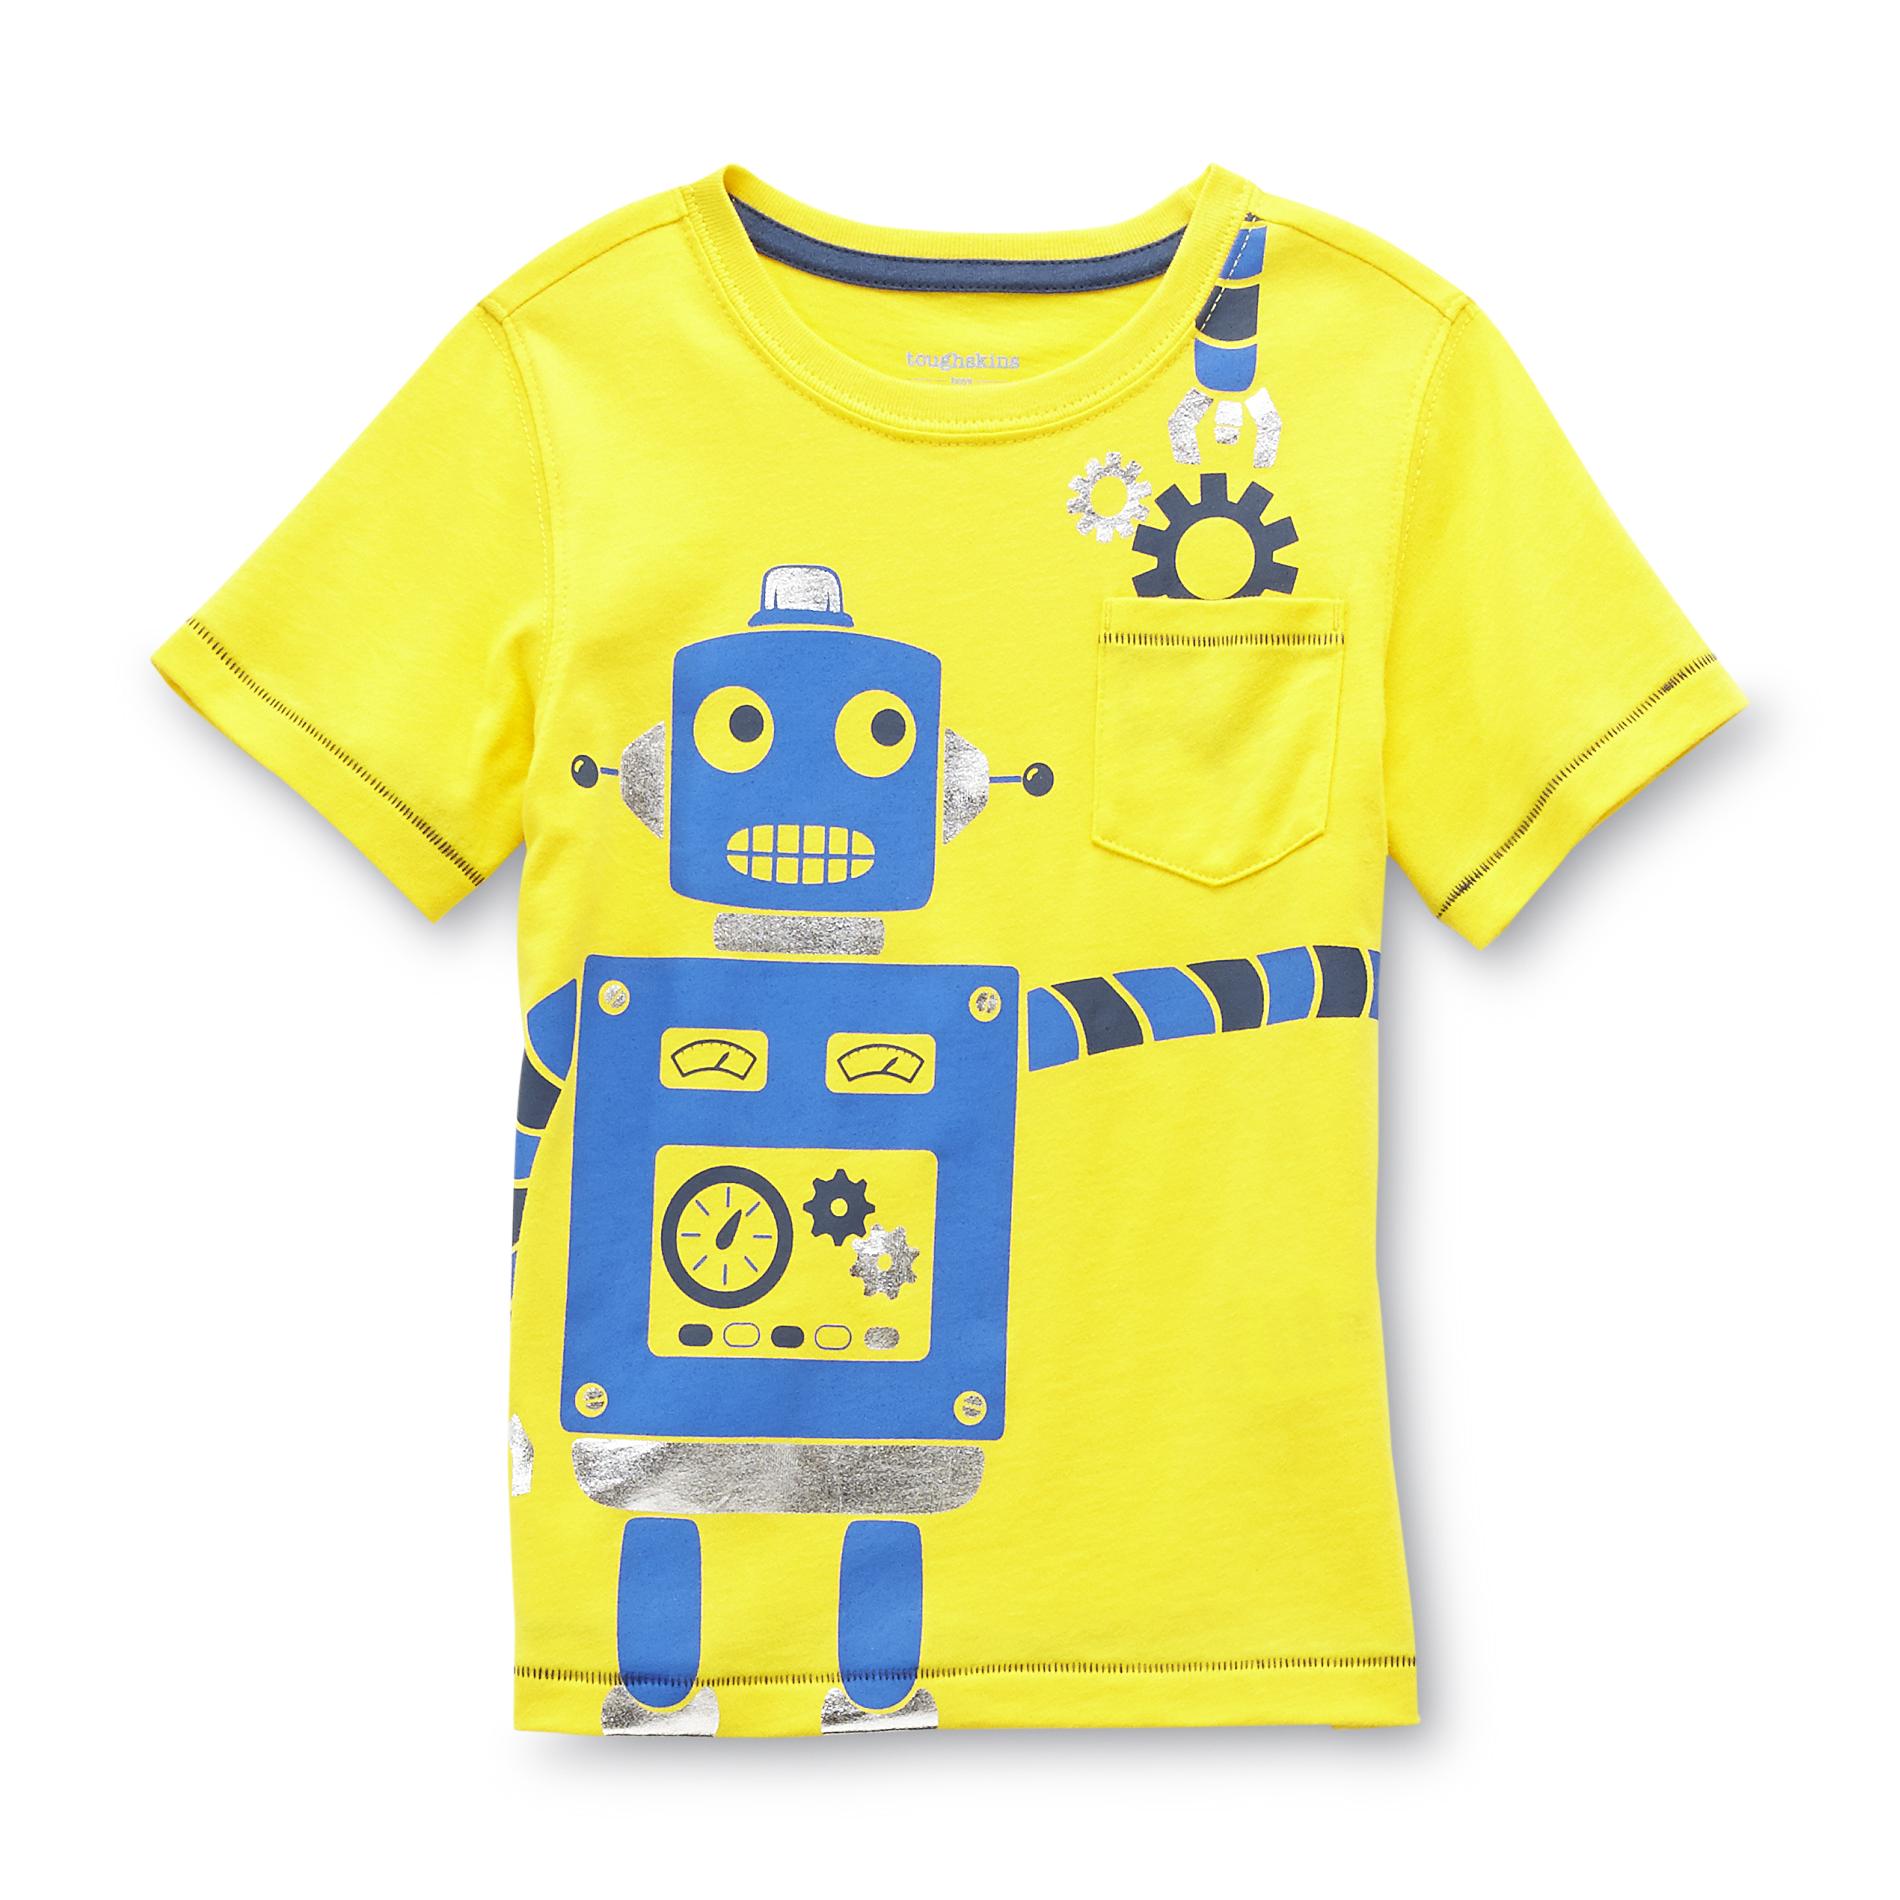 Toughskins Boy's Graphic T-Shirt - Robot